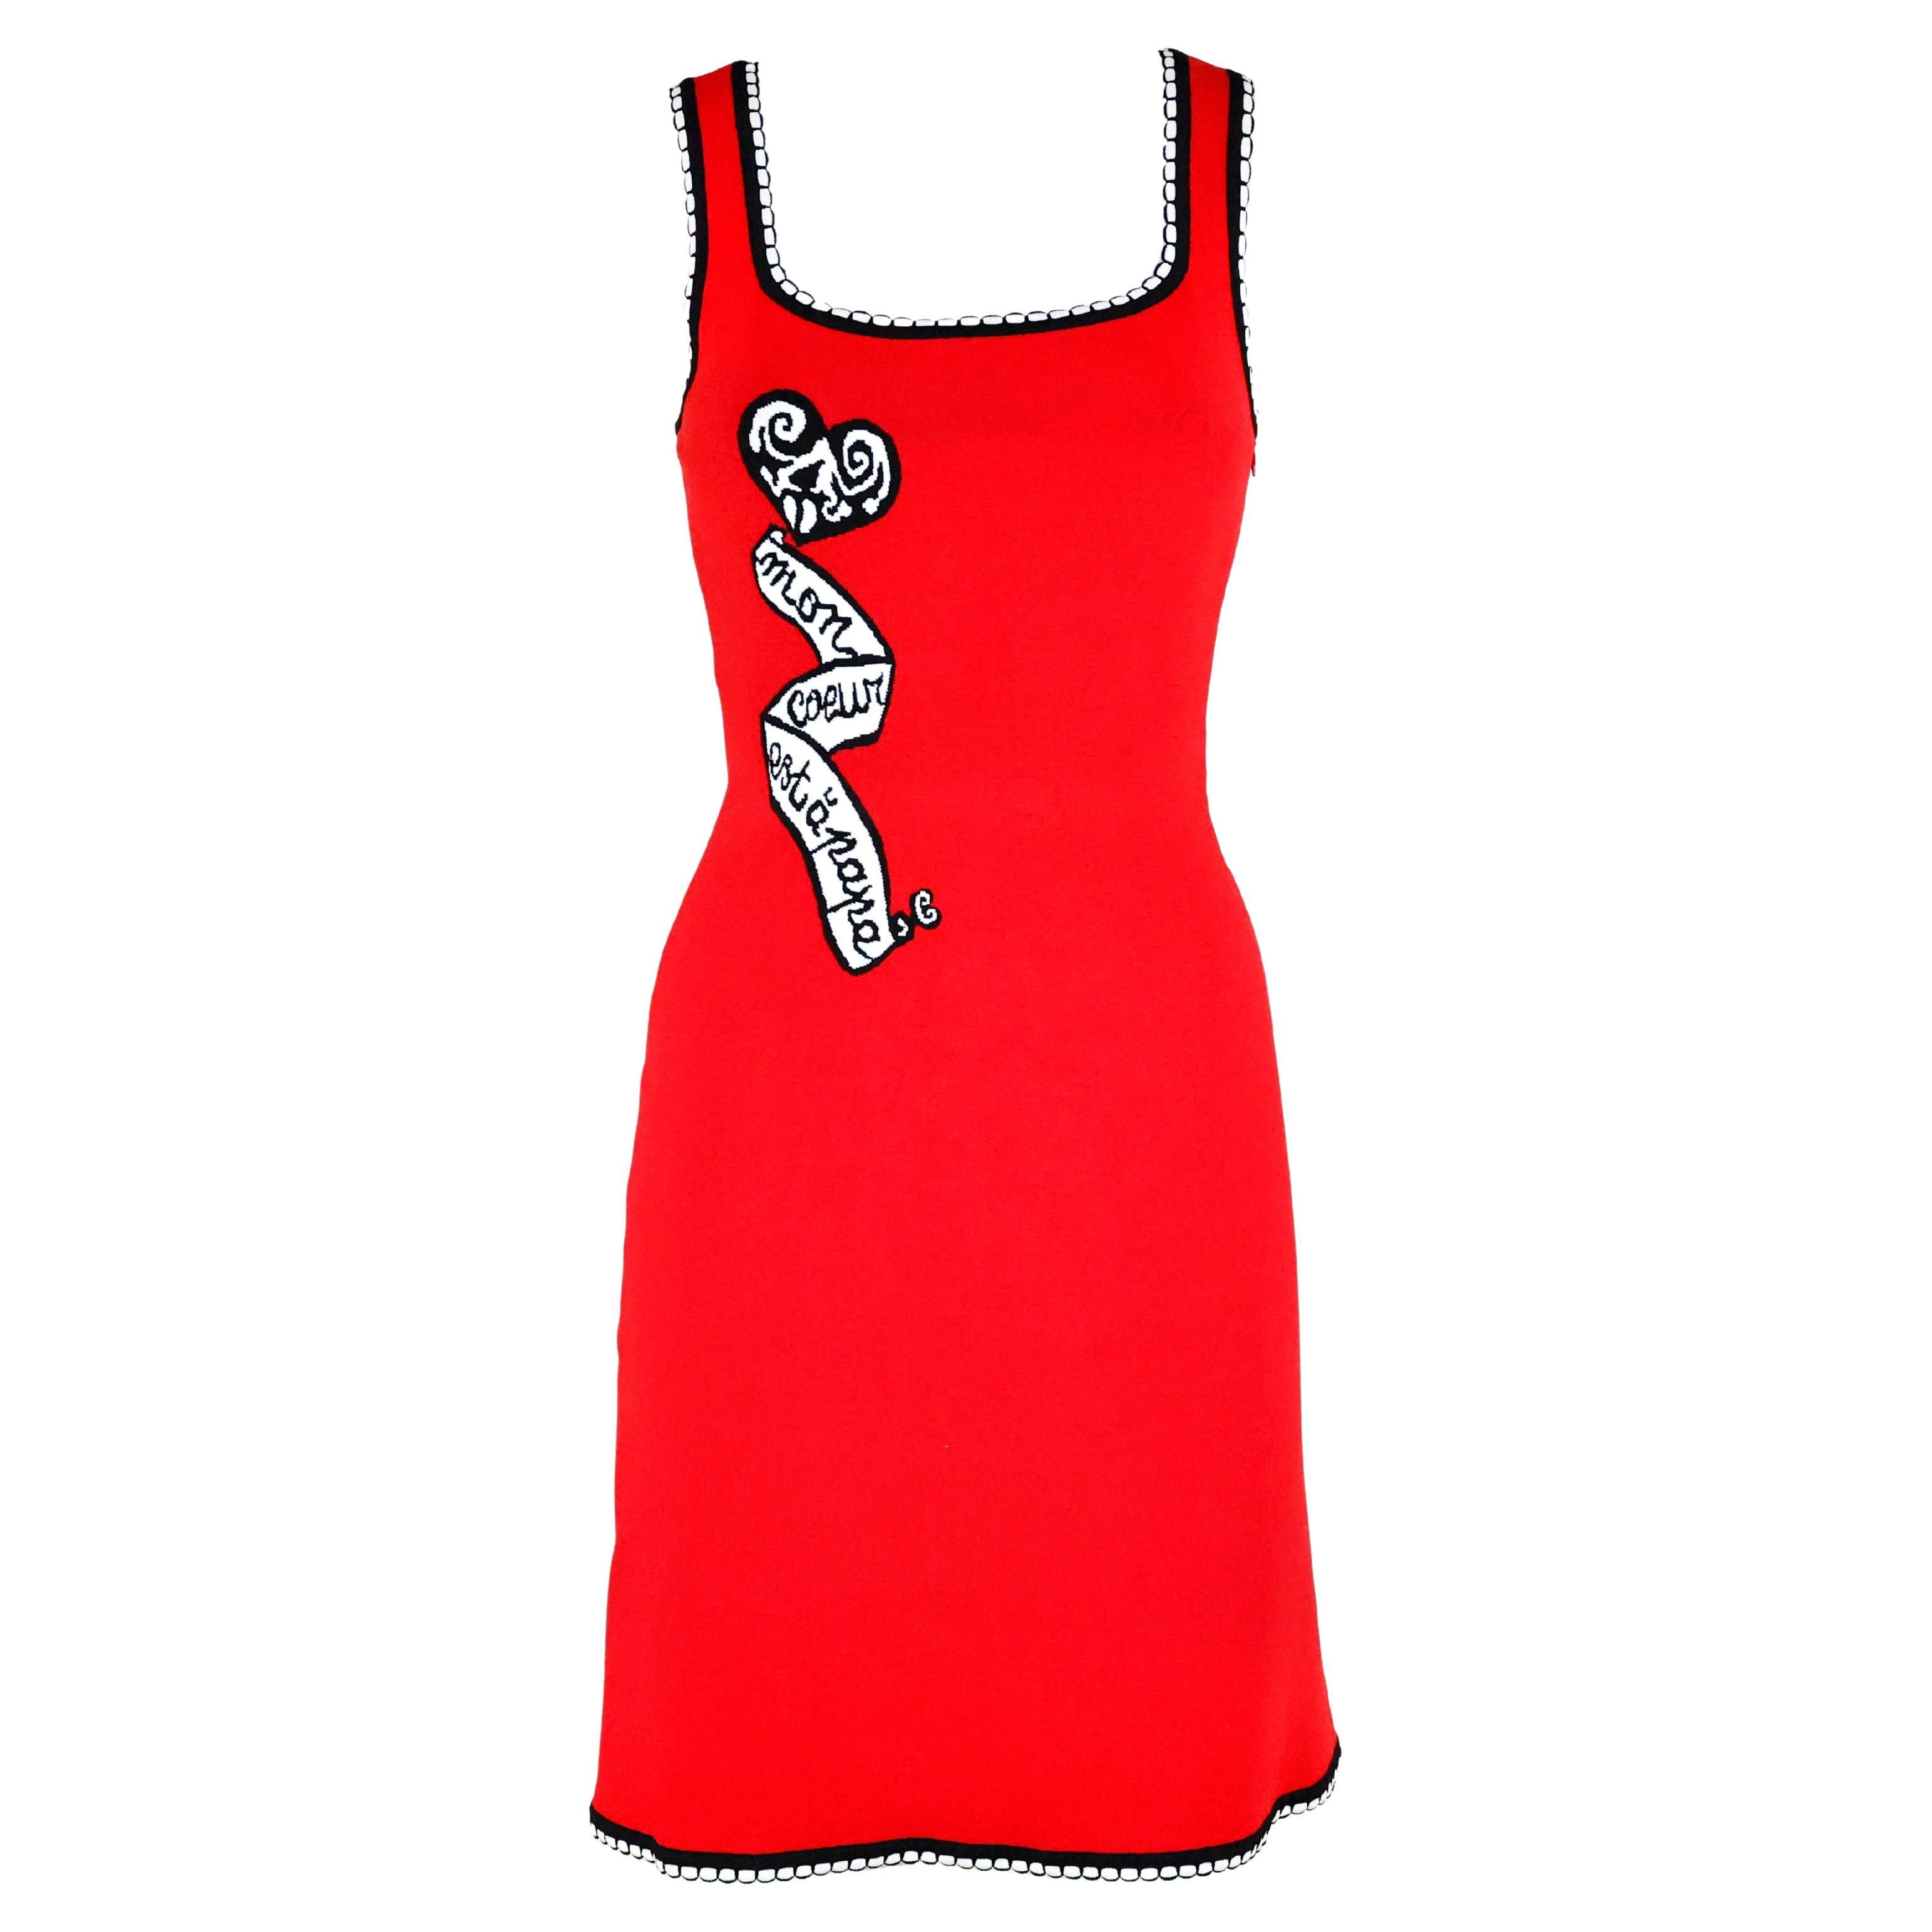 Azzedine Alaia "Mon Coeur est A Papa" Red Dress For Sale